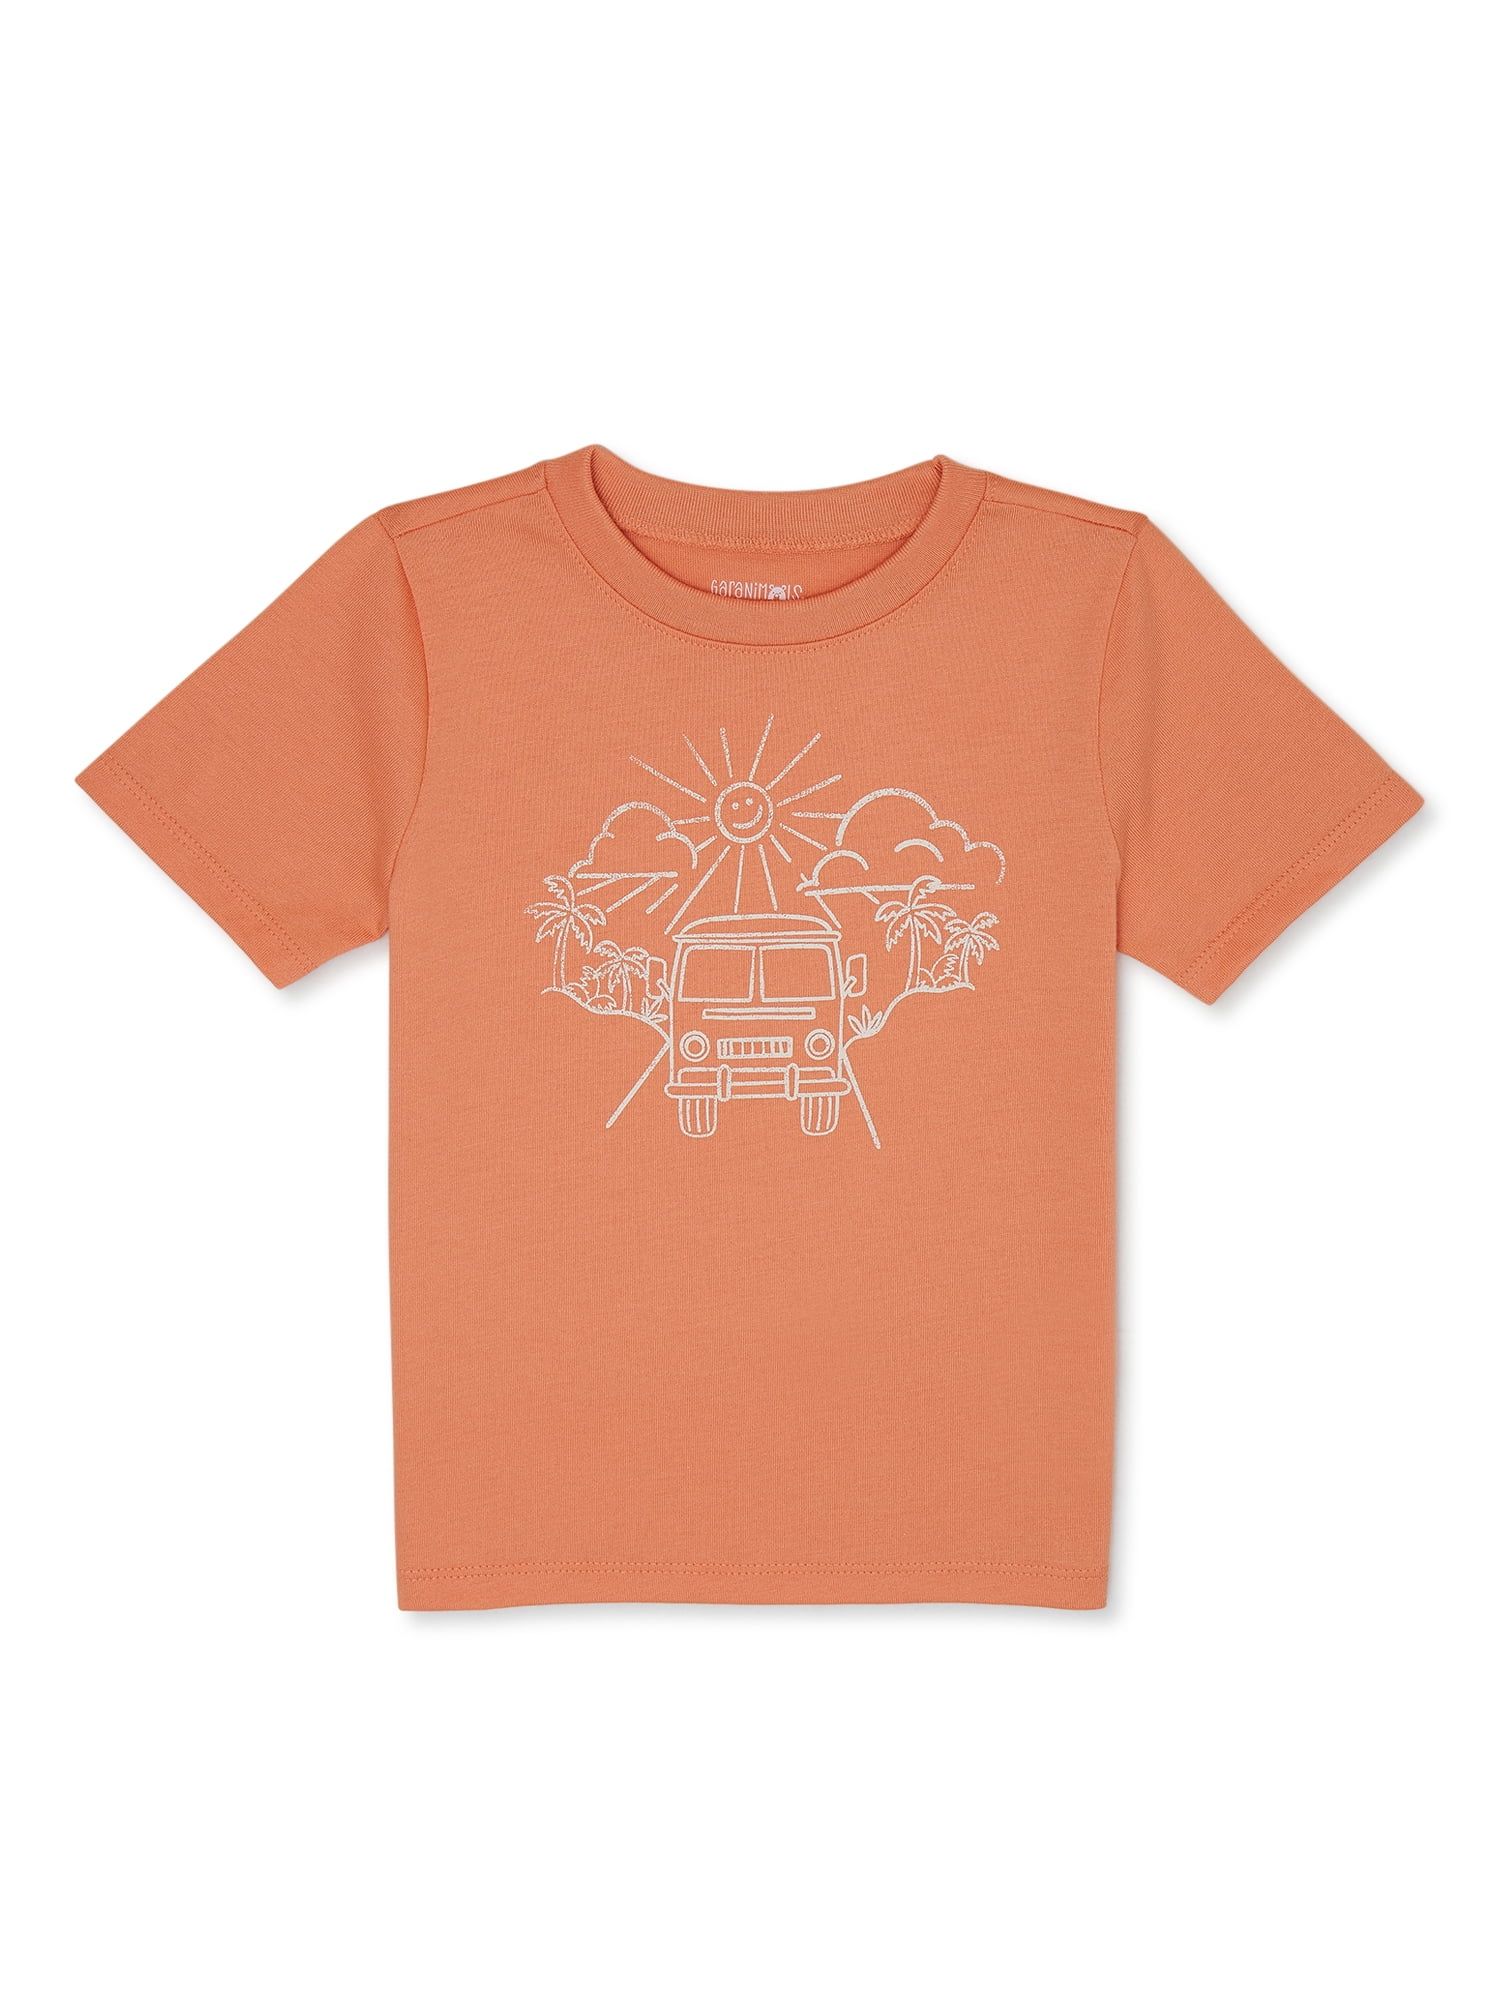 Garanimals Toddler Boy Short Sleeve Graphic T-Shirt, Sizes 18M-5T | Walmart (US)